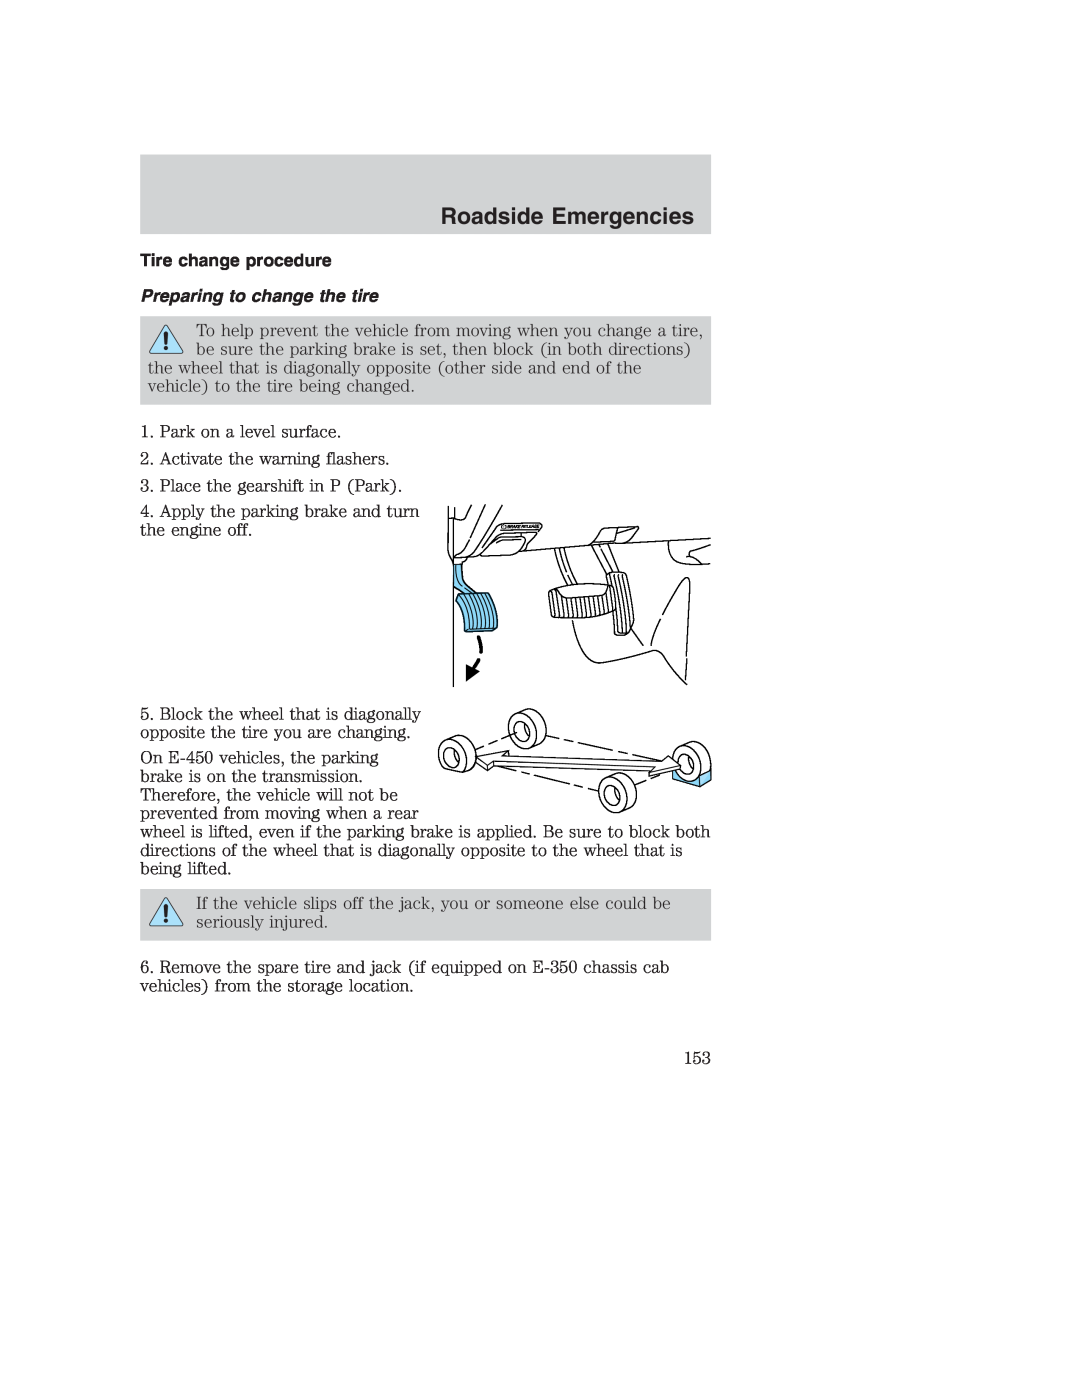 Ford AM/FM stereo manual Tire change procedure, Preparing to change the tire, Roadside Emergencies 